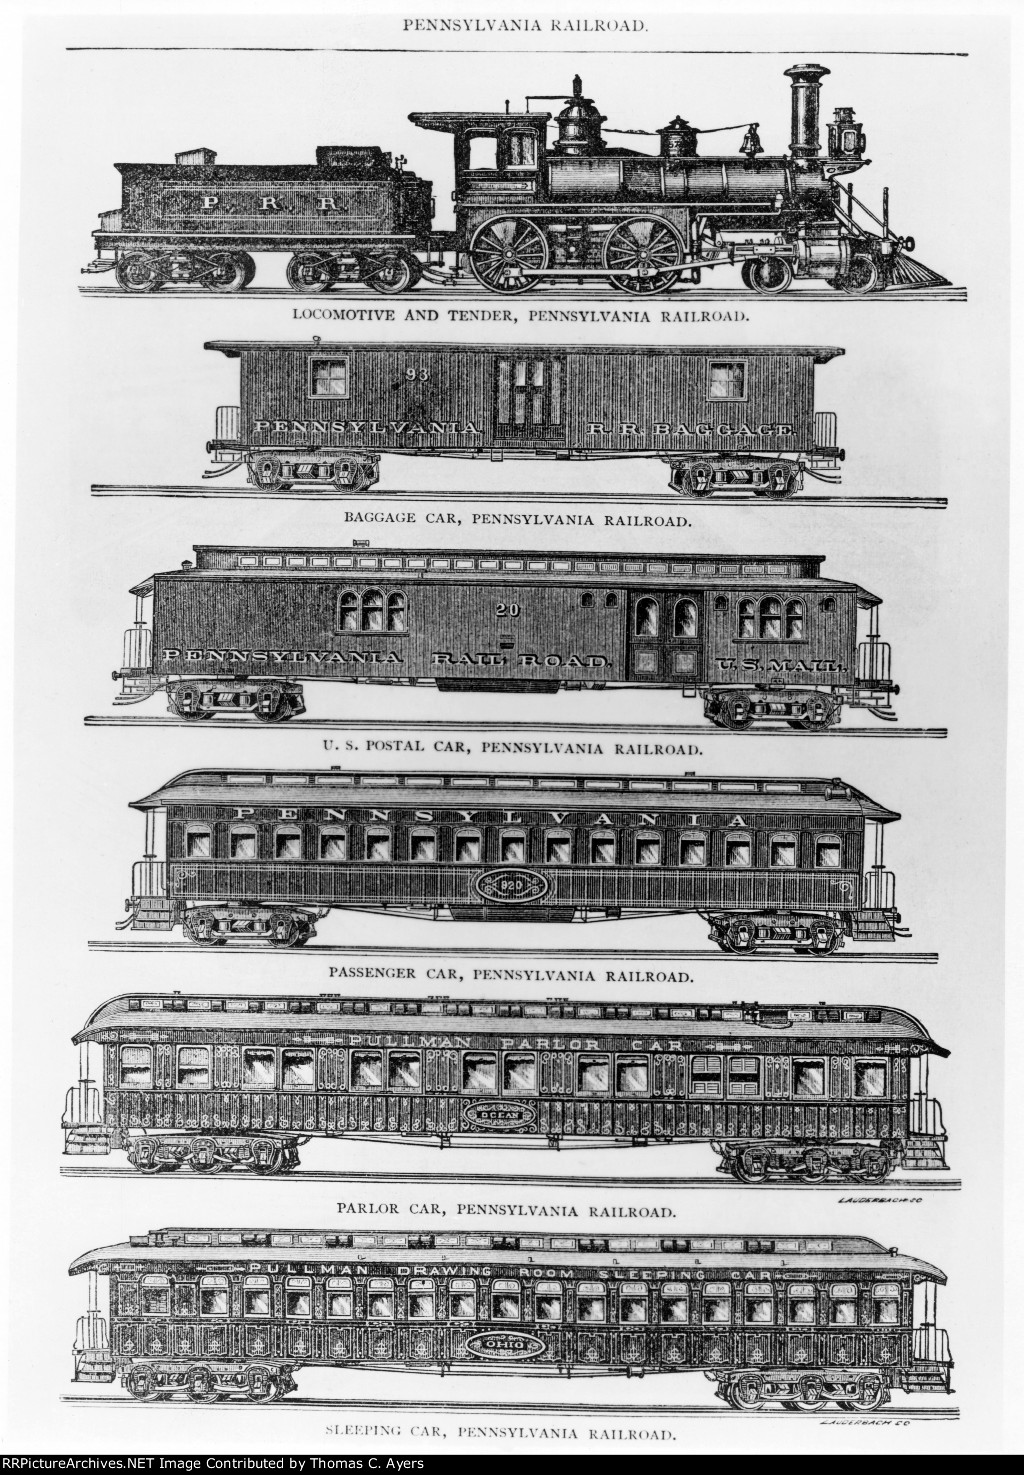 PRR Passenger Train, c. 1890